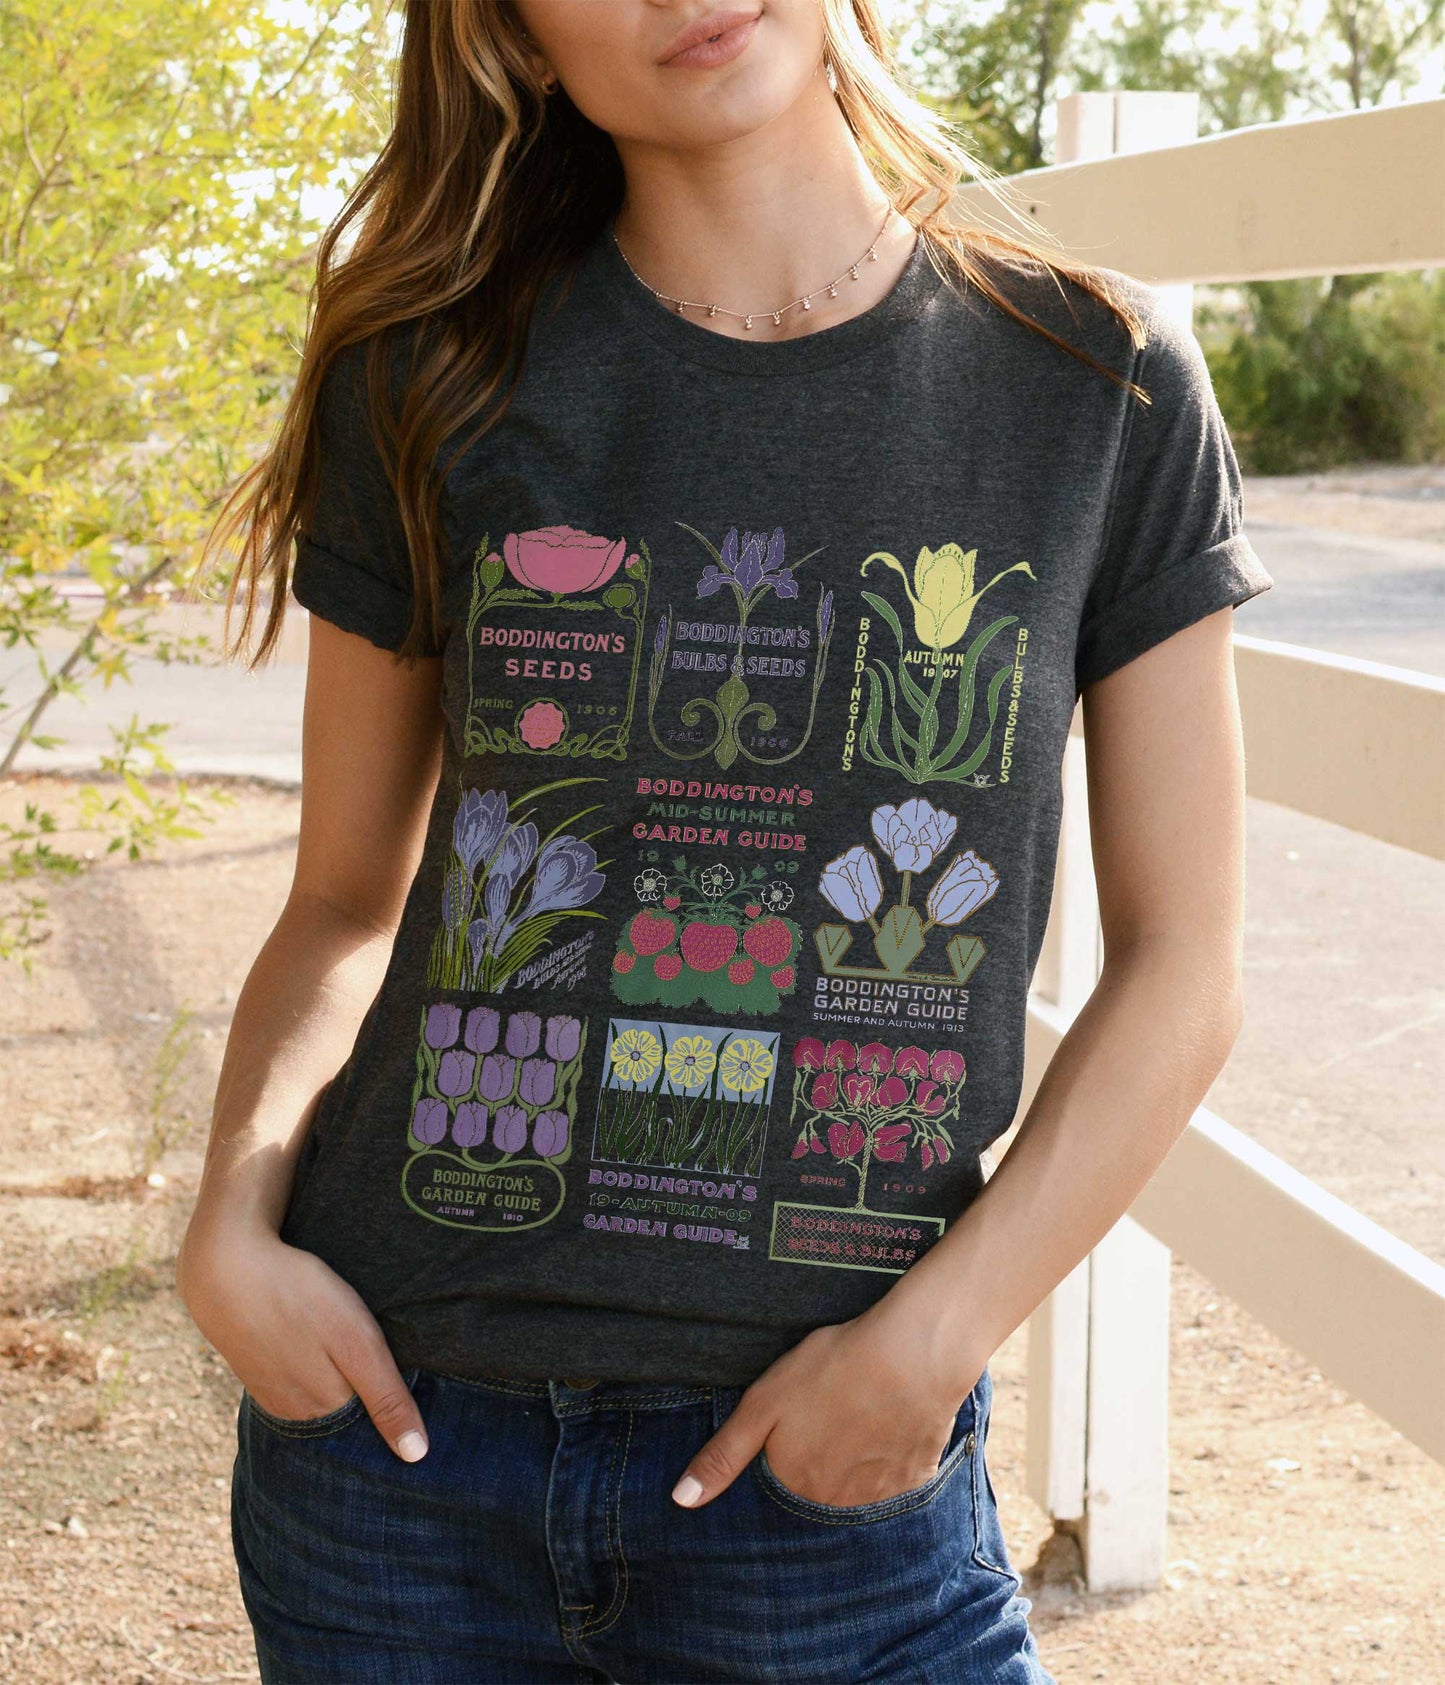 Vintage Garden Art Seed Packet tshirt, Art Nouveau, Retro, Nature lovers, Botanical Gardener's Gift with Iris, Sweet Peas, Poppies & Tulips